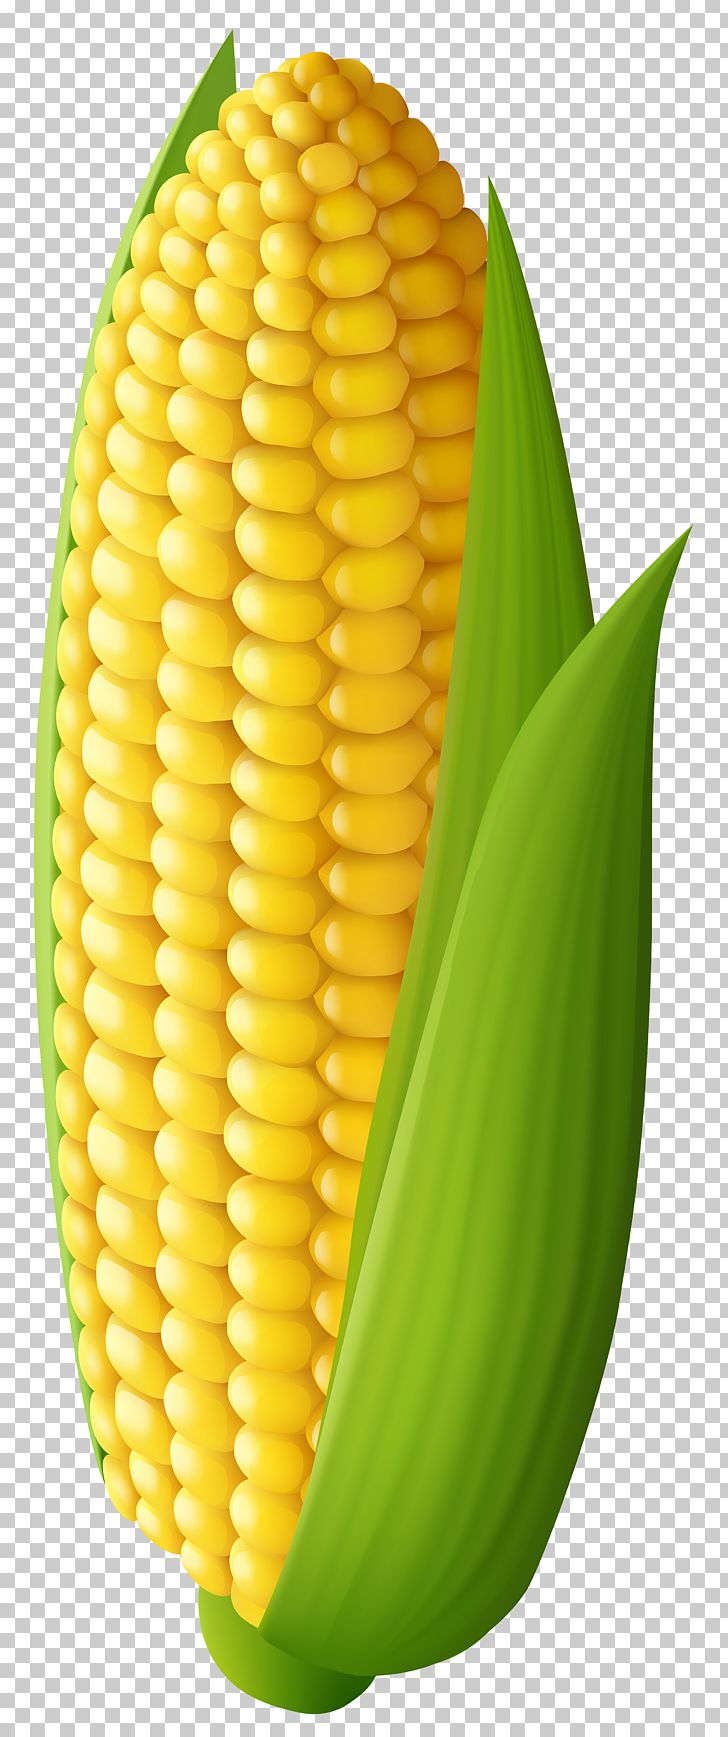 Corn On The Cob Maize PNG, Clipart, Art, Clip Art, Clipart, Commodity, Corncob Free PNG Download